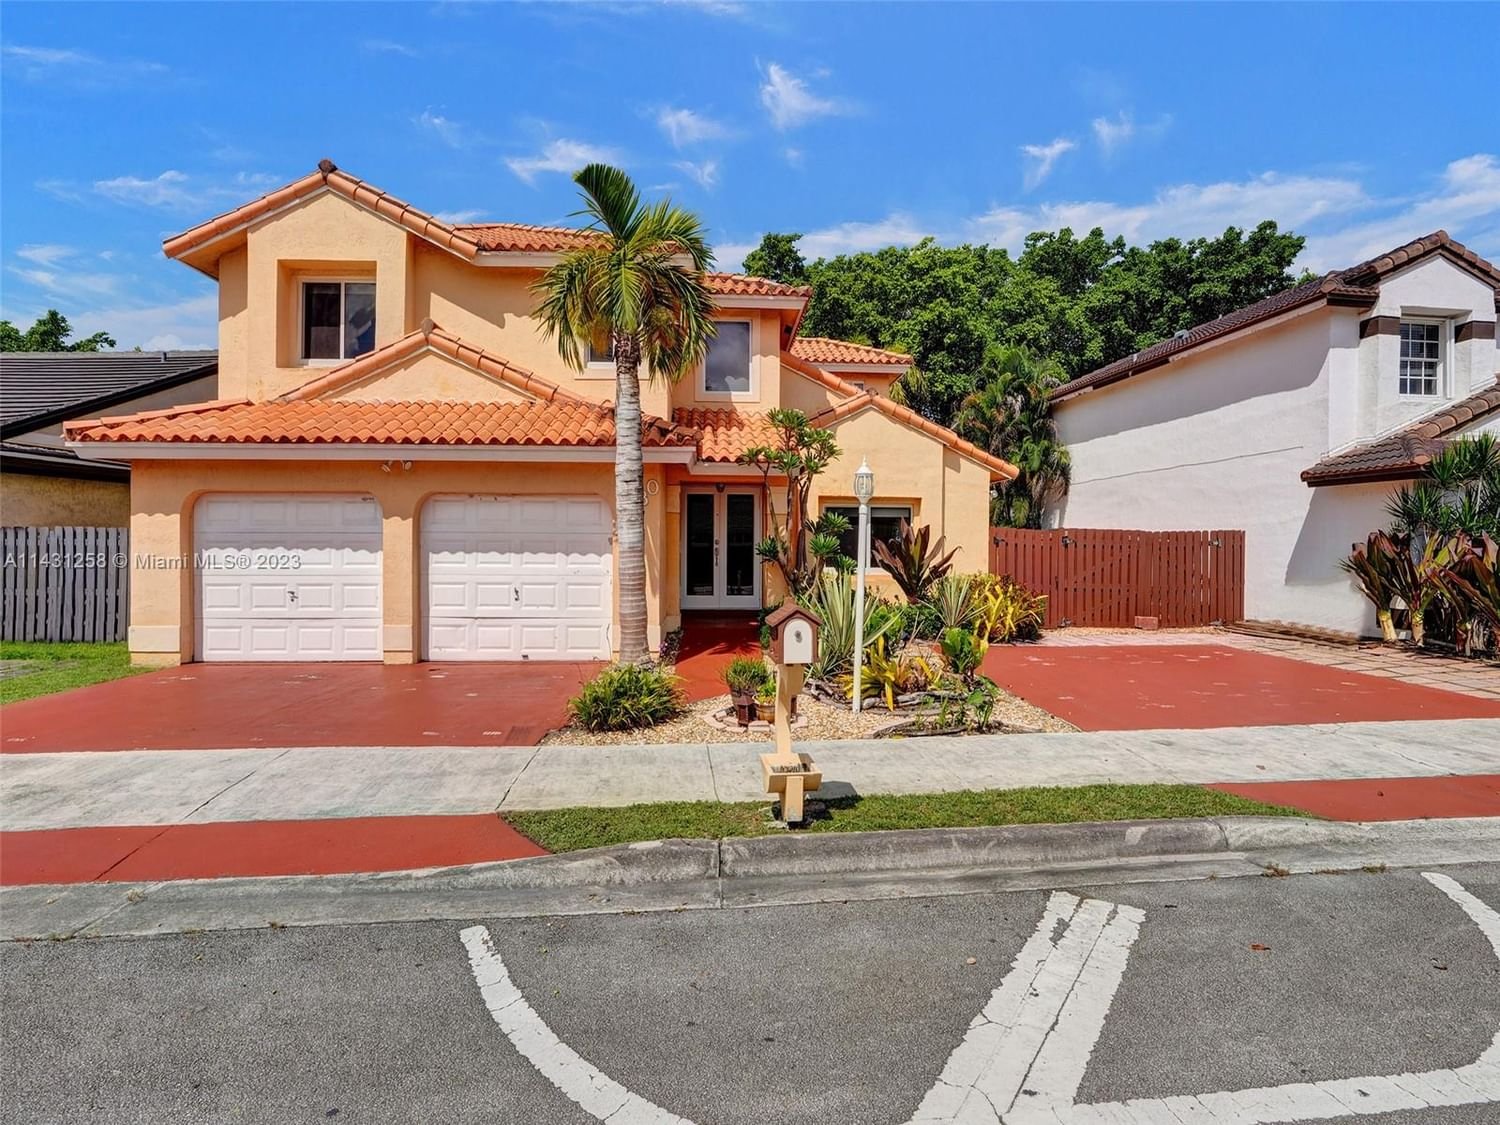 Real estate property located at 10230 146th Ave, Miami-Dade County, Miami, FL